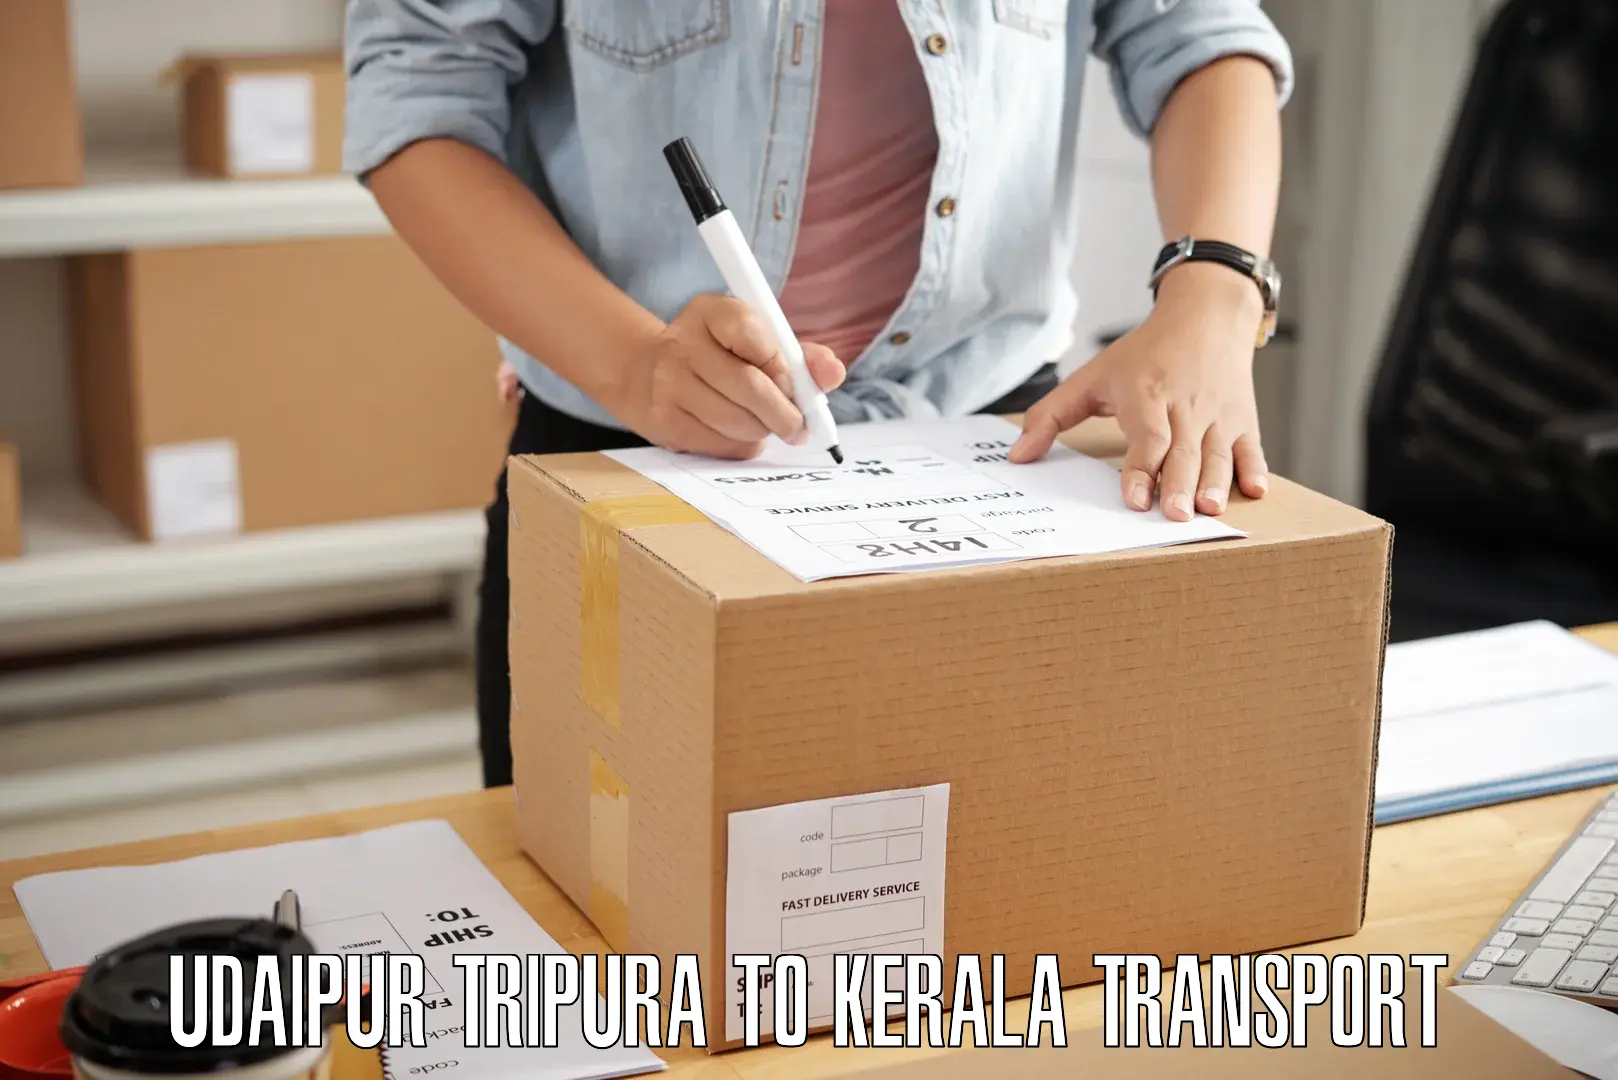 Online transport service Udaipur Tripura to Cochin